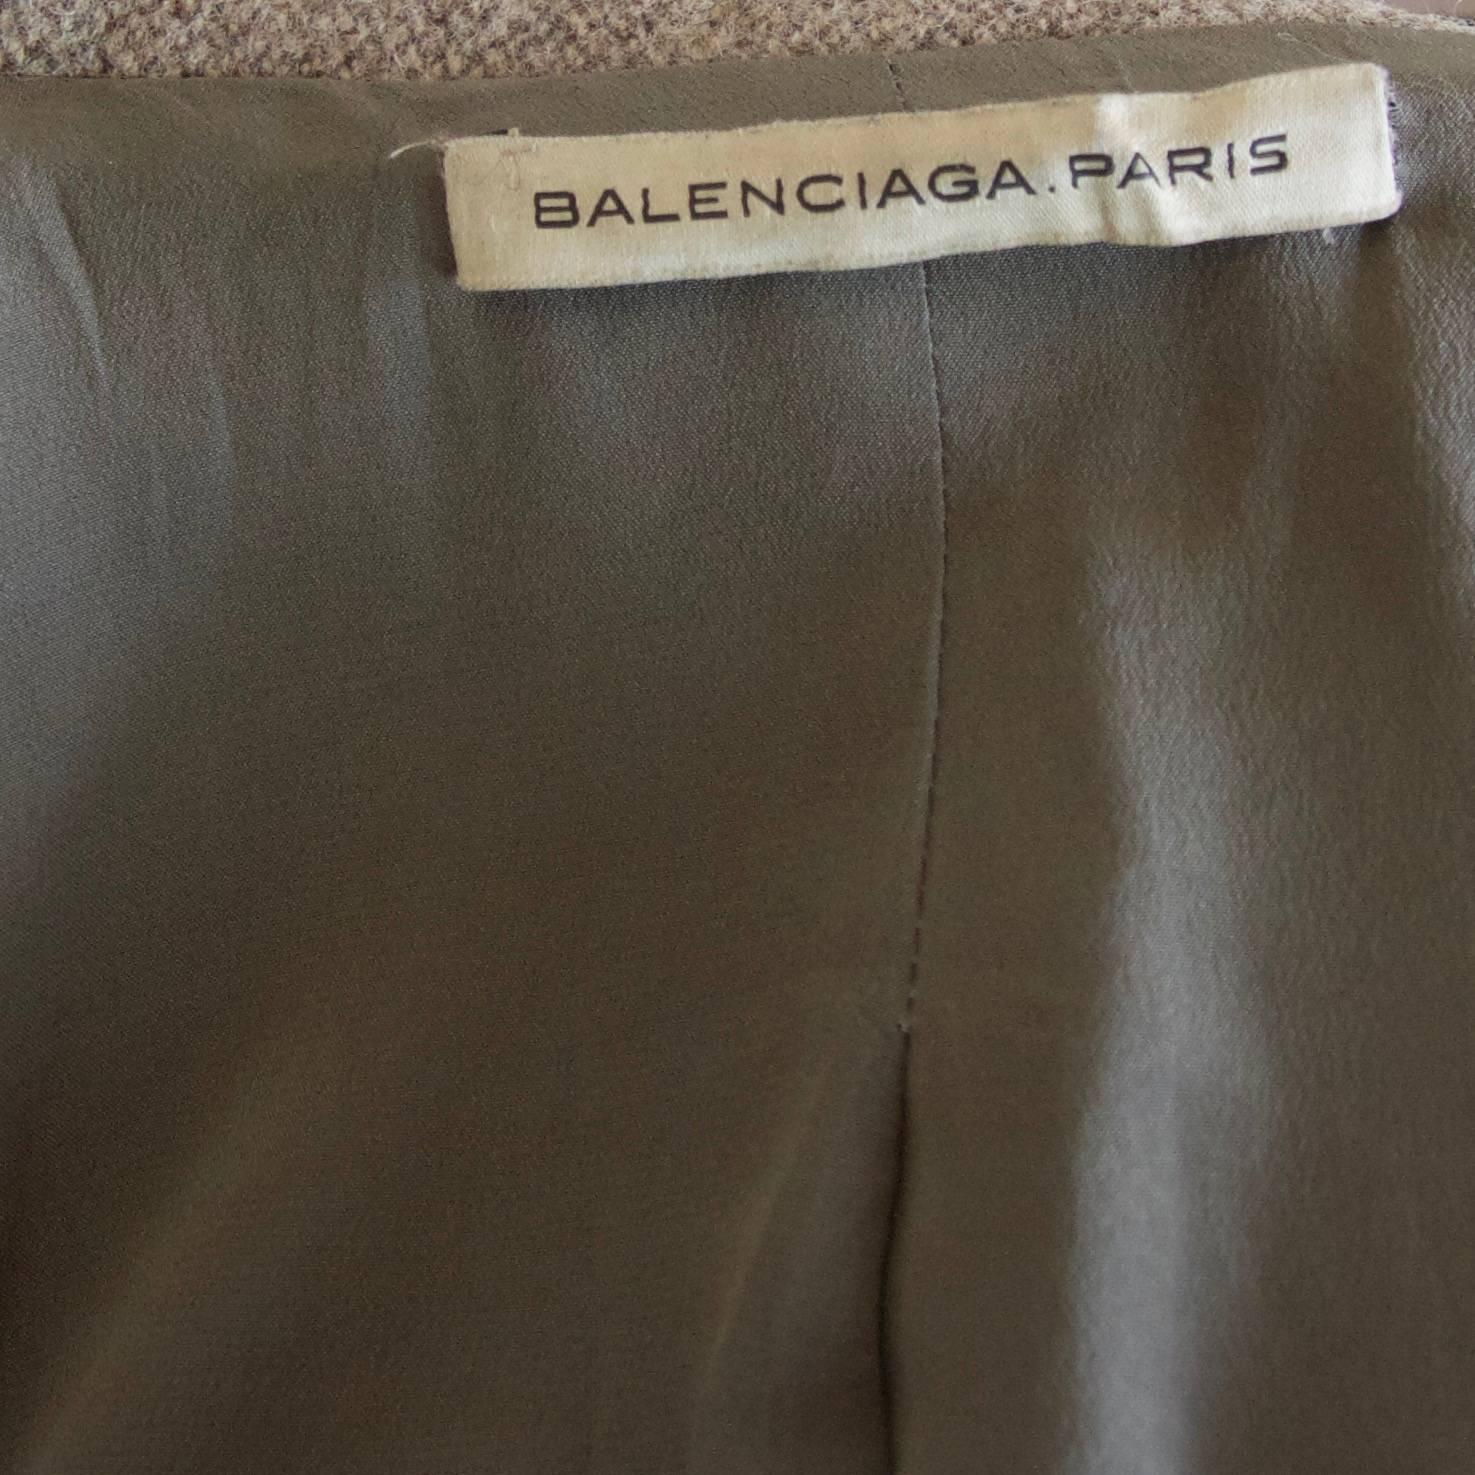 Balenciaga Paris Coat In Excellent Condition For Sale In London, GB